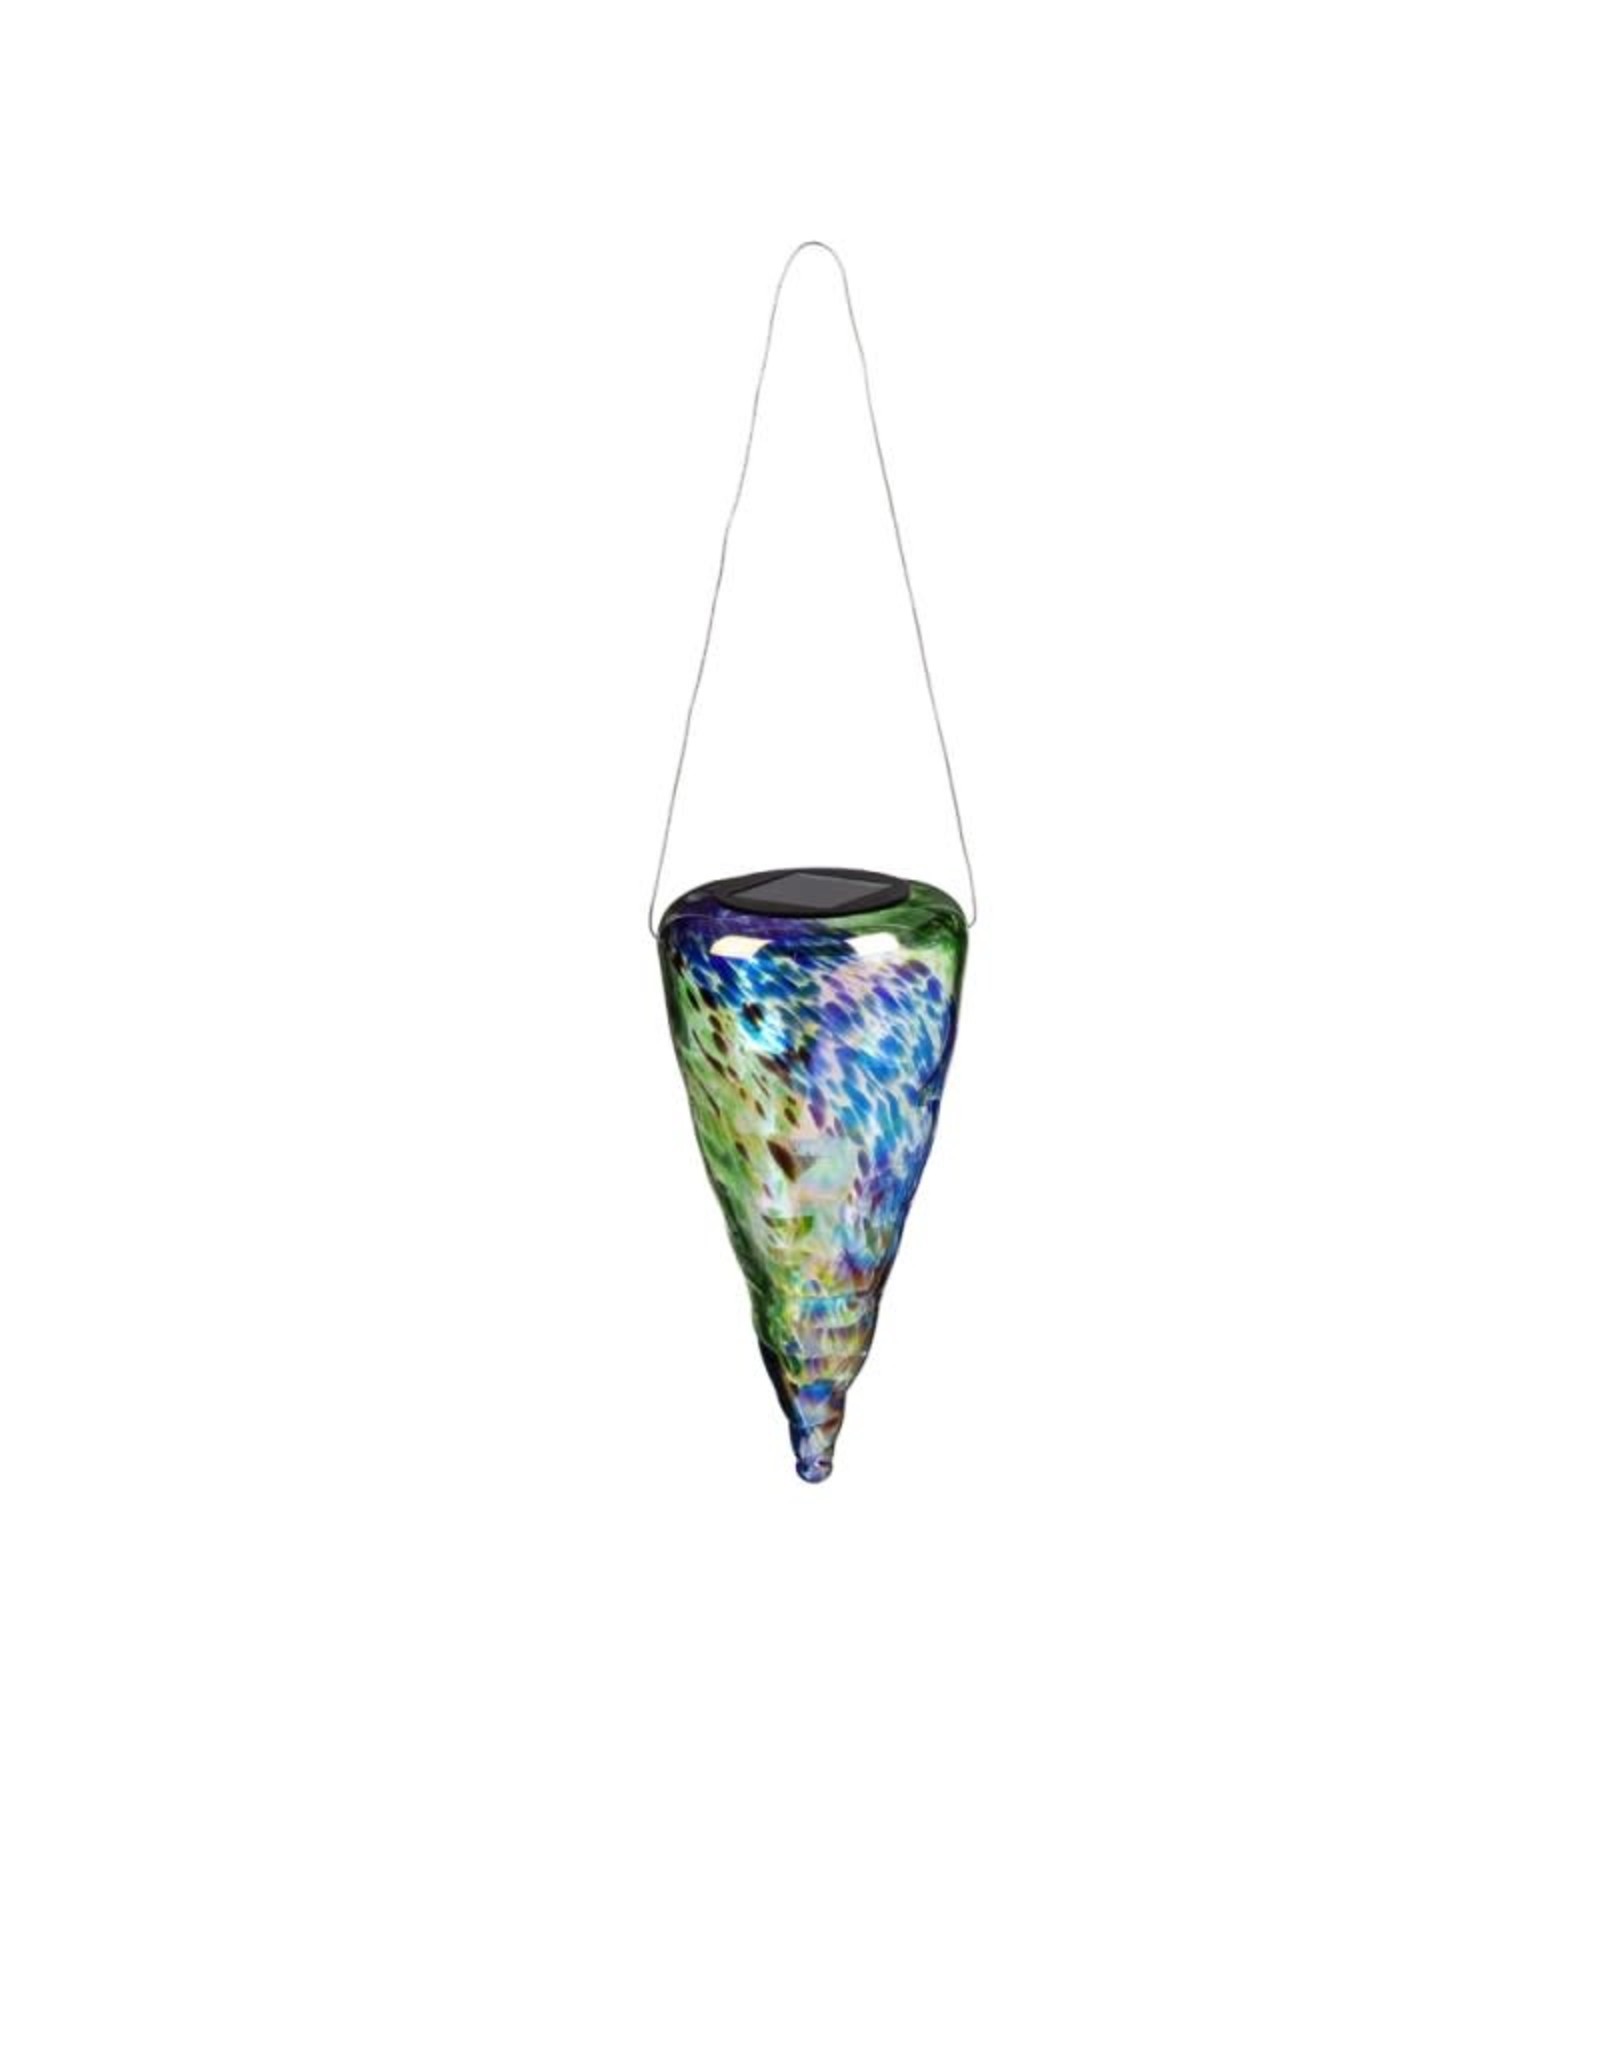 Solar Hanging Lantern - Blue & Green Art Glass